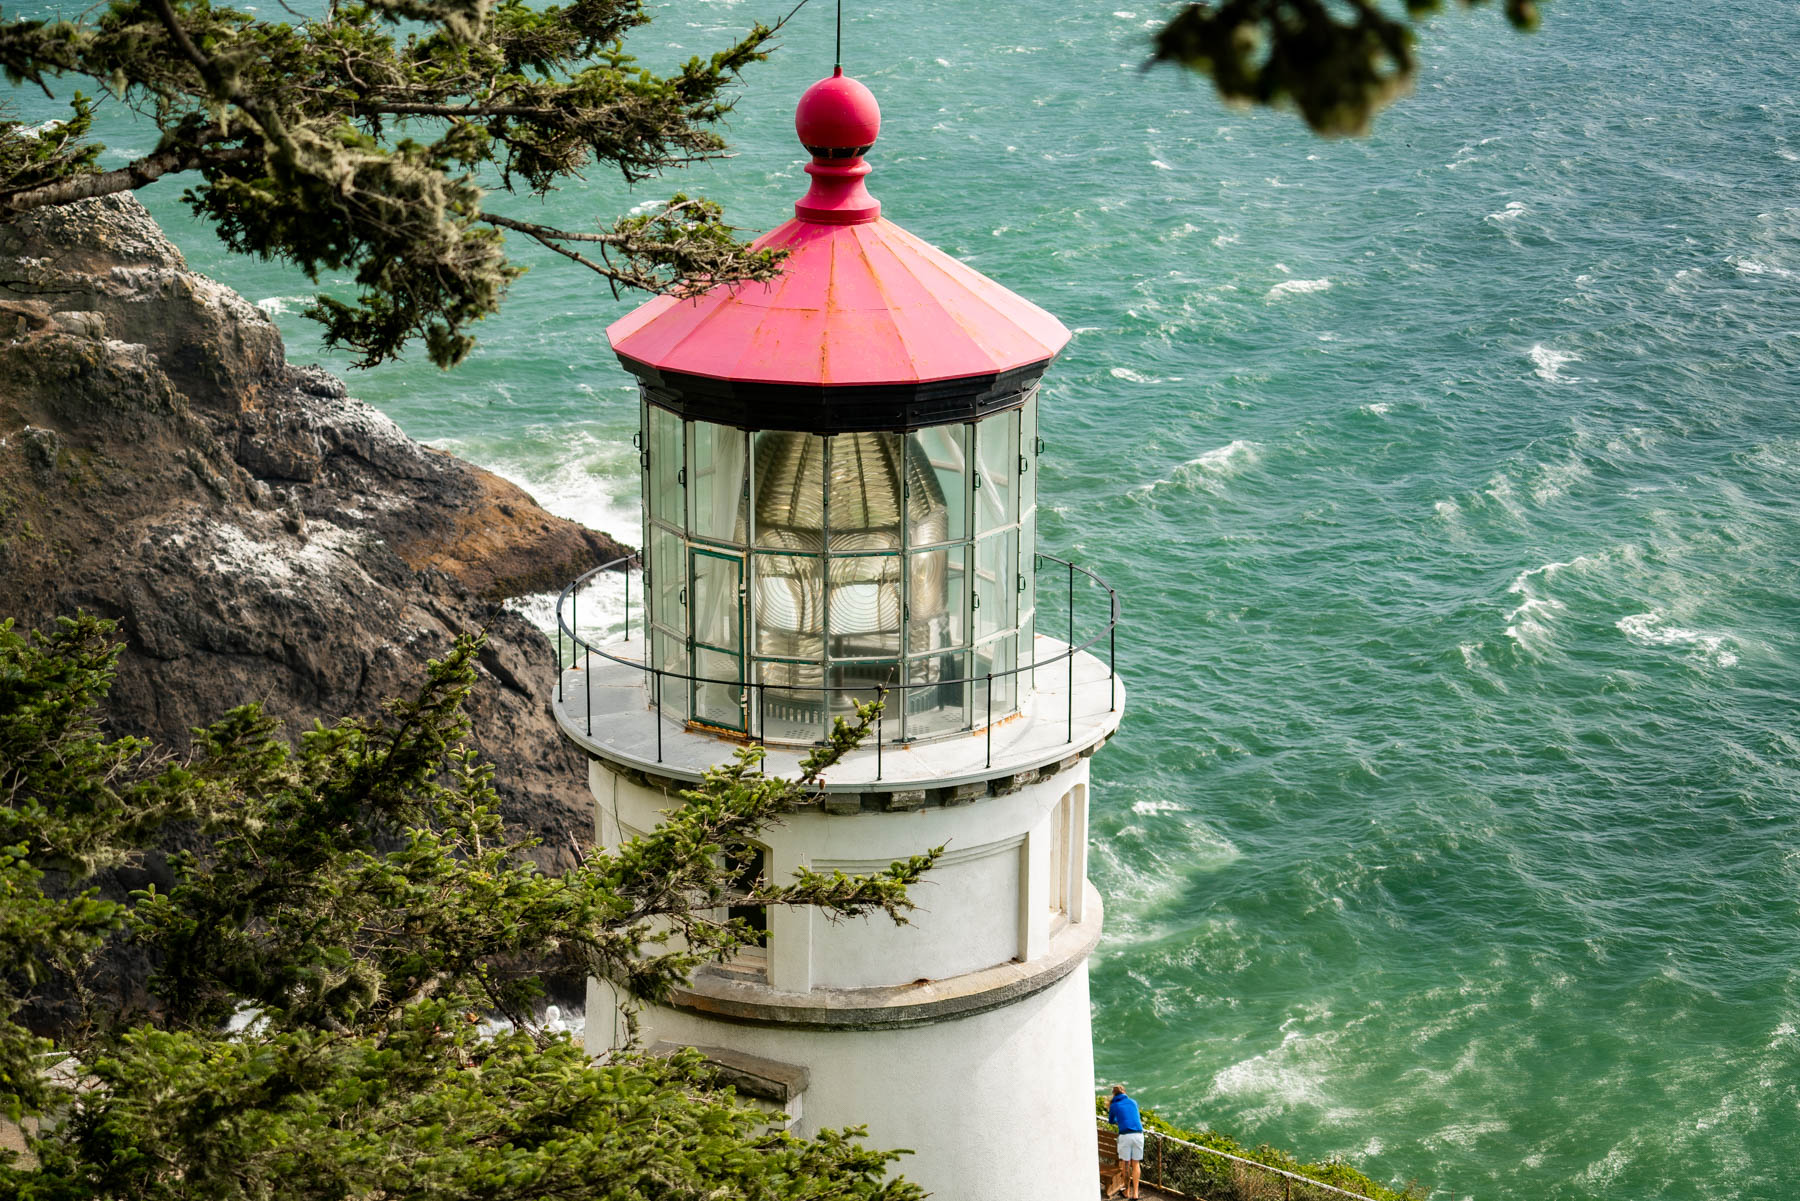 Heceta Head Lighthouse
oregon coast lighthouses